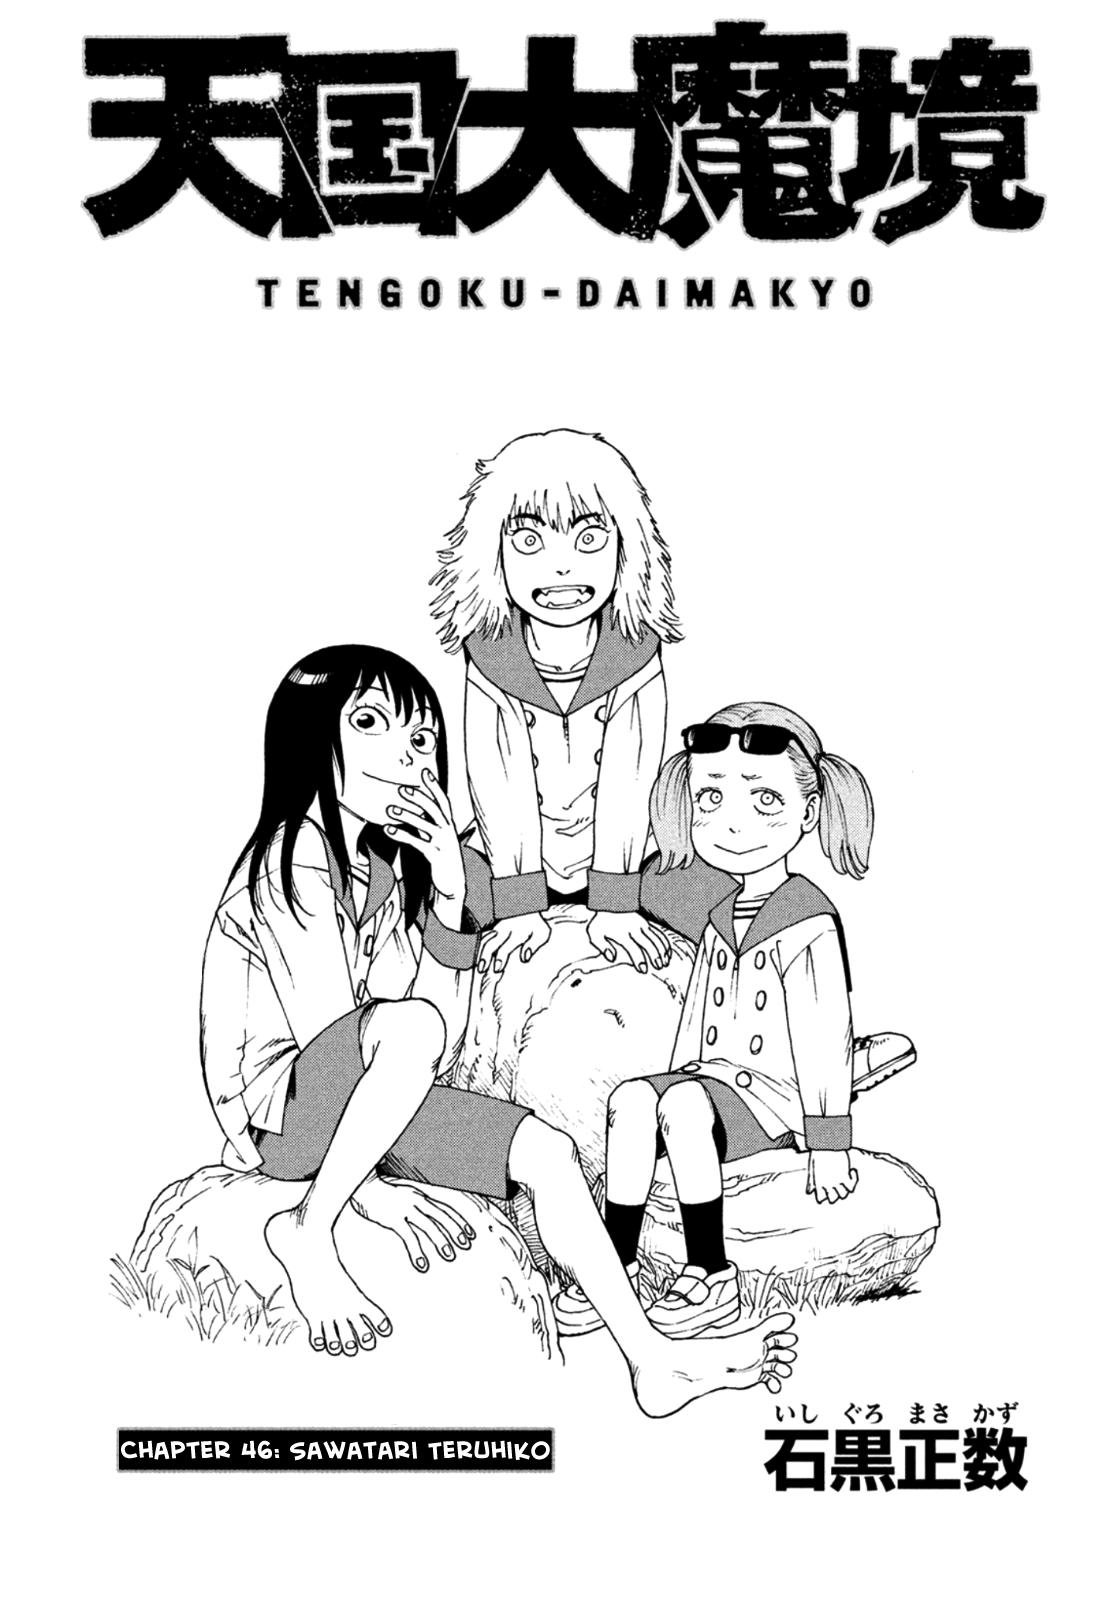 Tengoku Daimakyou Capítulo 26 - Manga Online